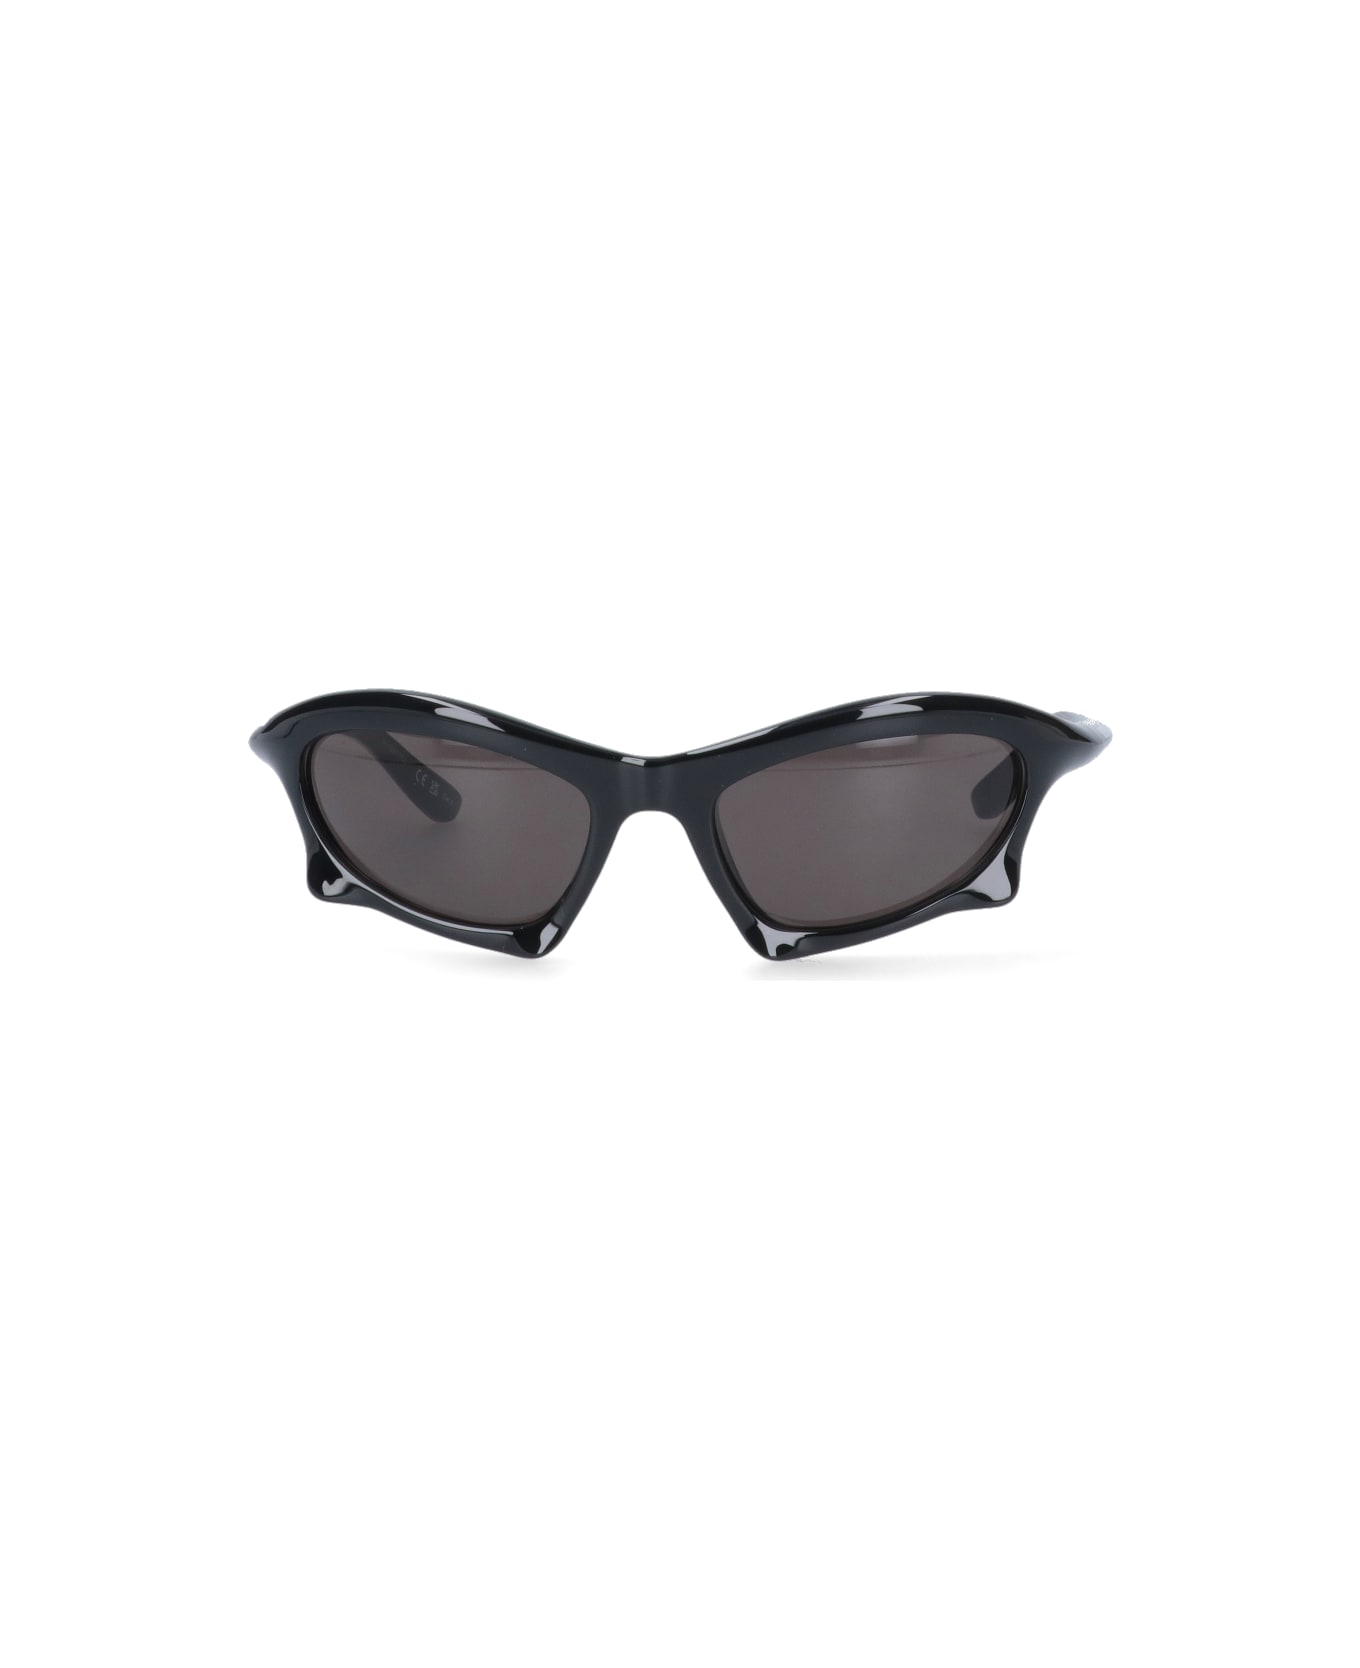 Balenciaga Eyewear Sunglasses In Black Acetate - Black